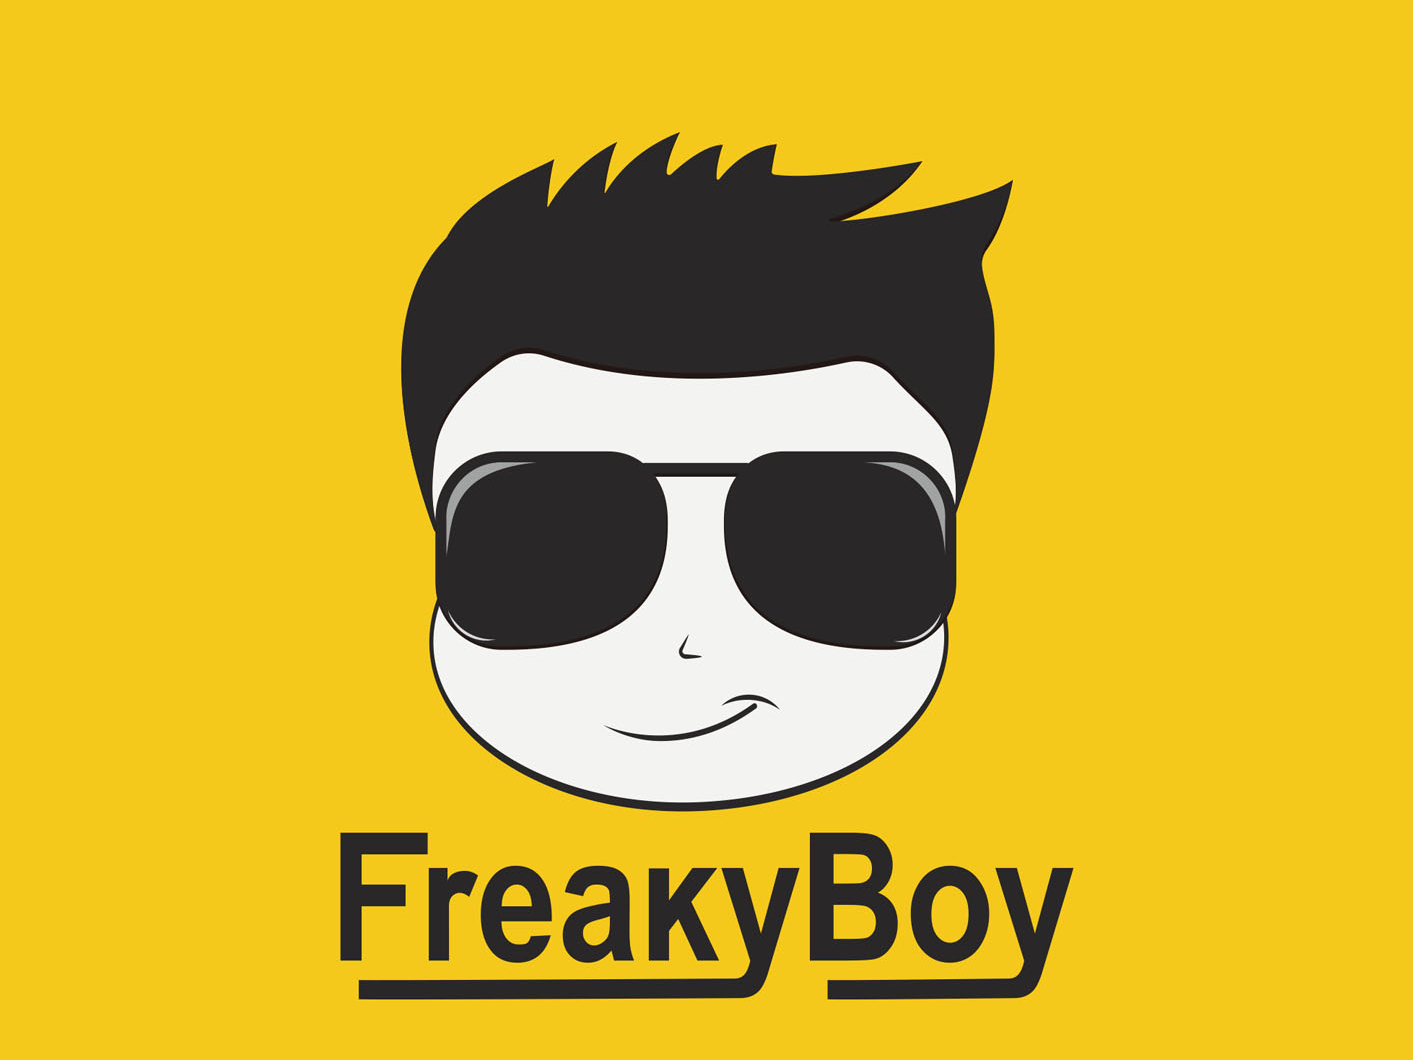 Freakyboy Twitter